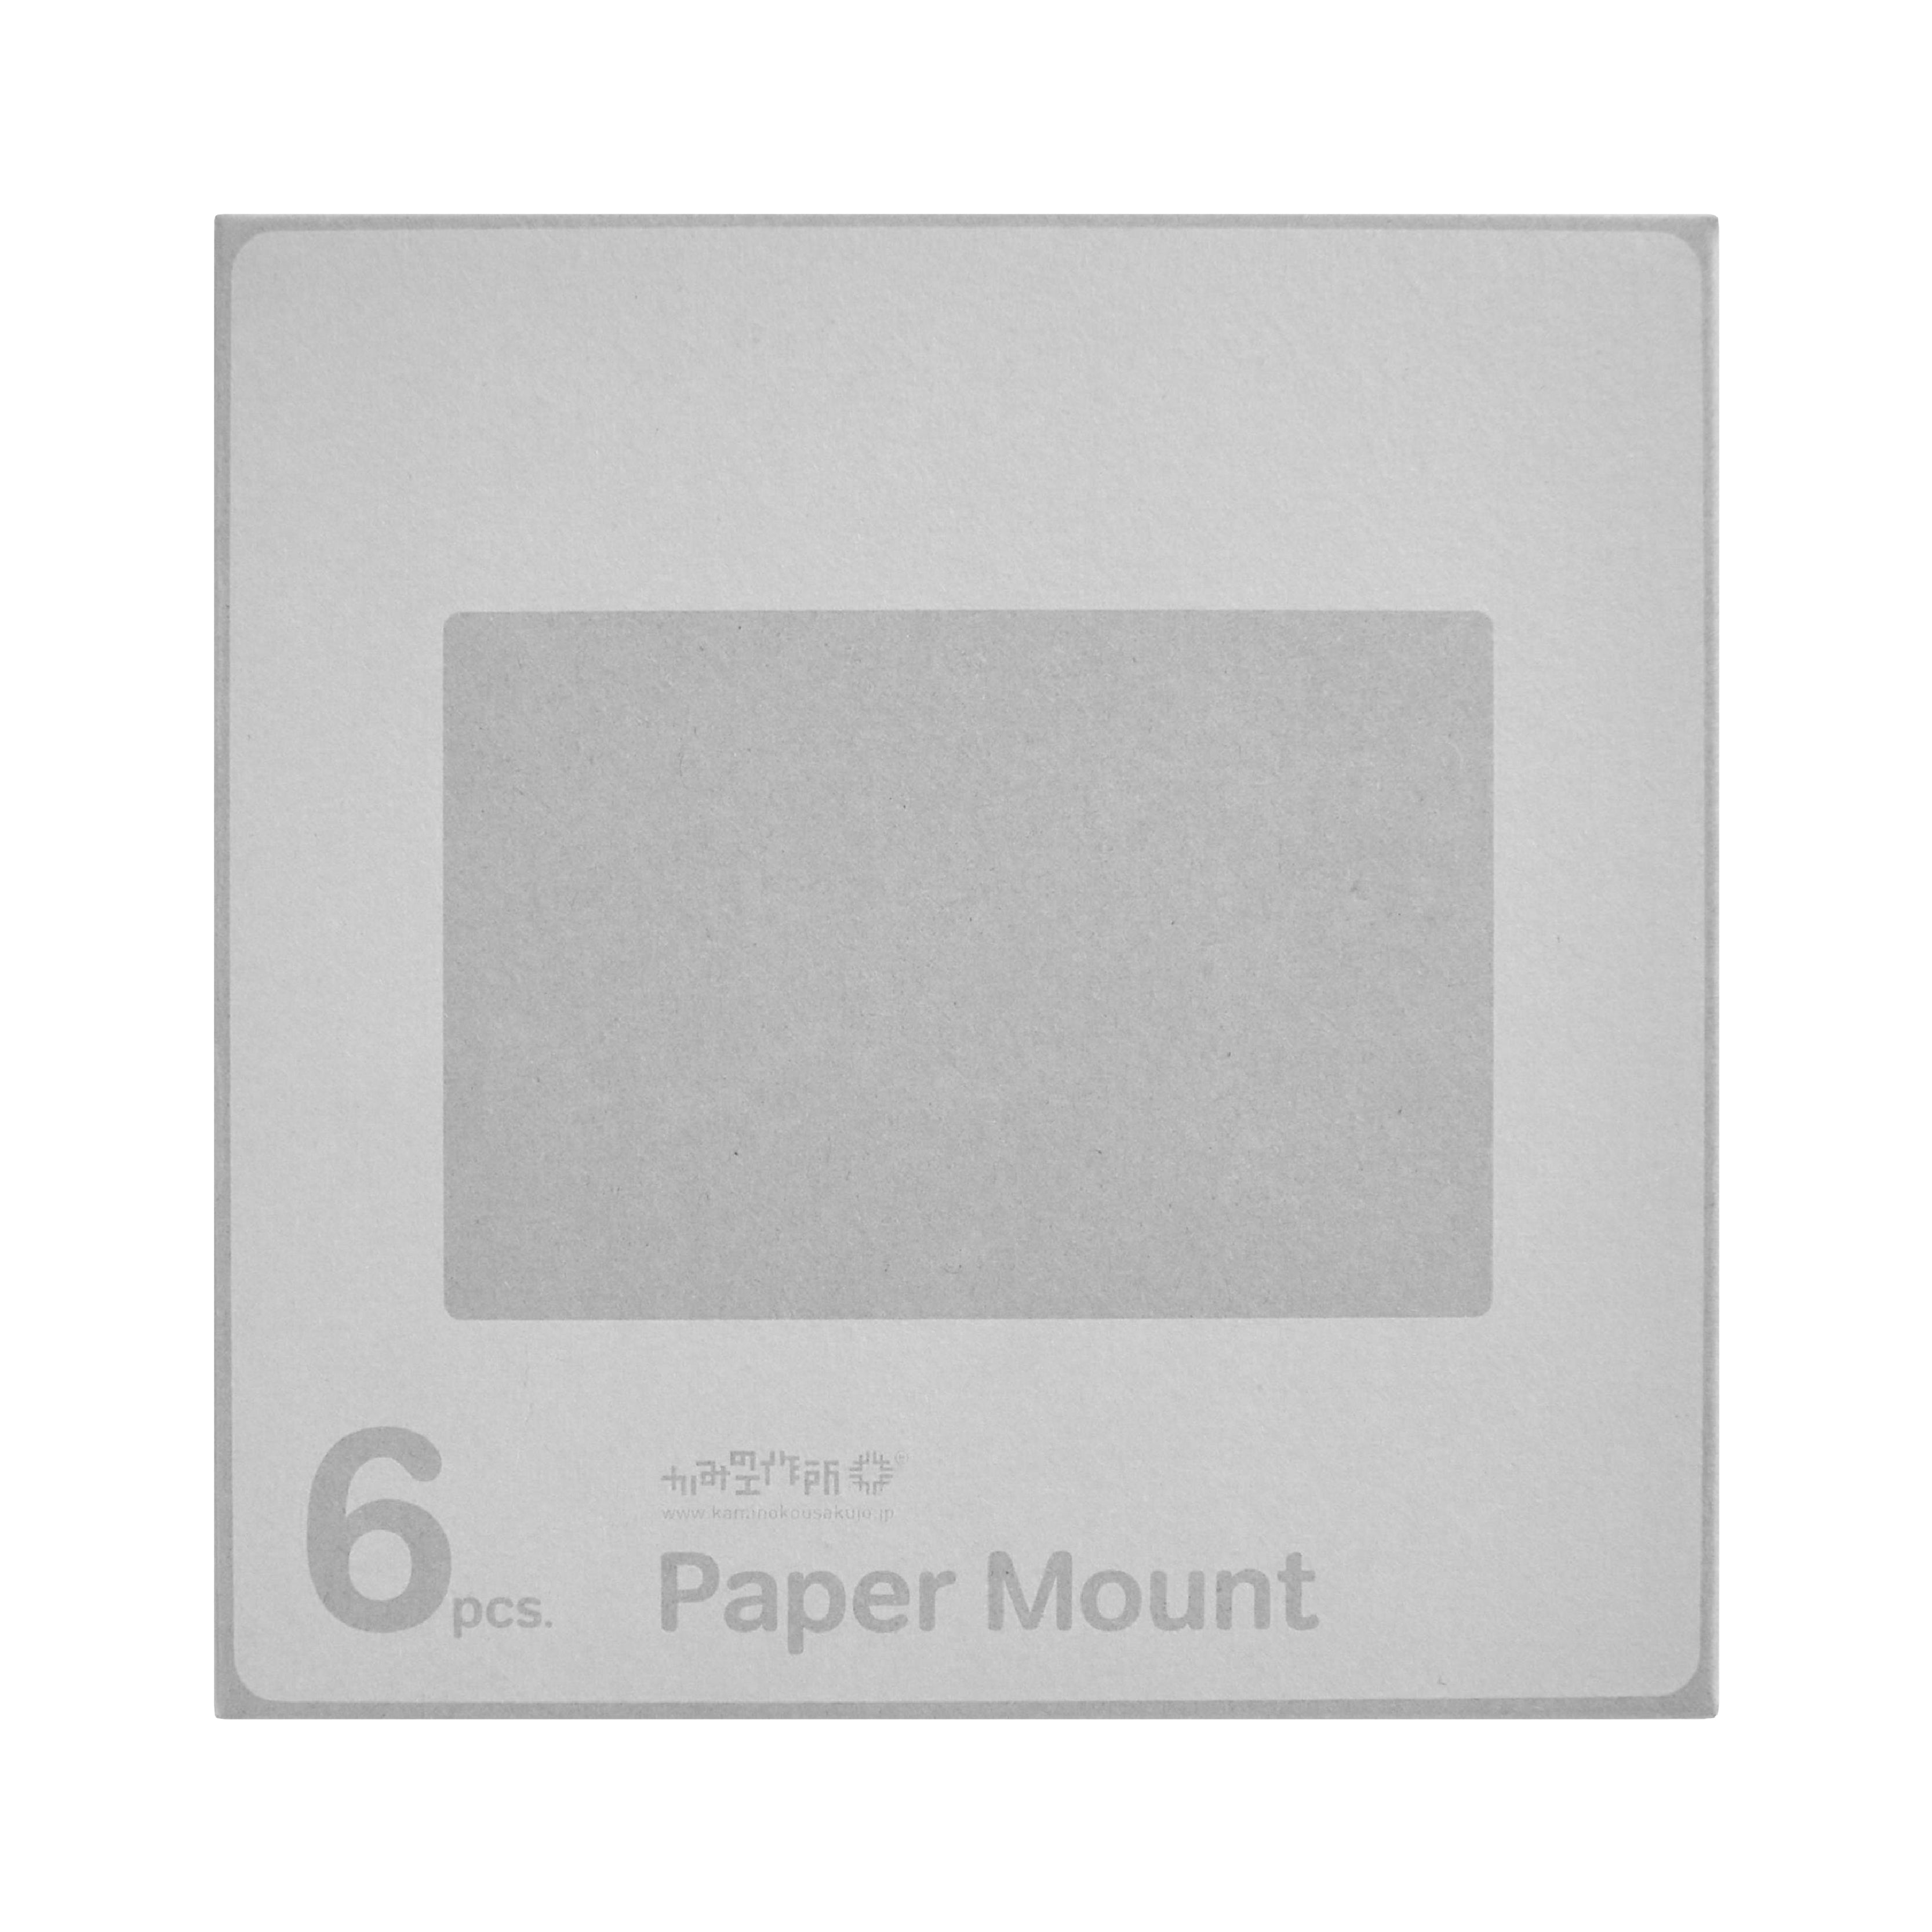 Paper Mount